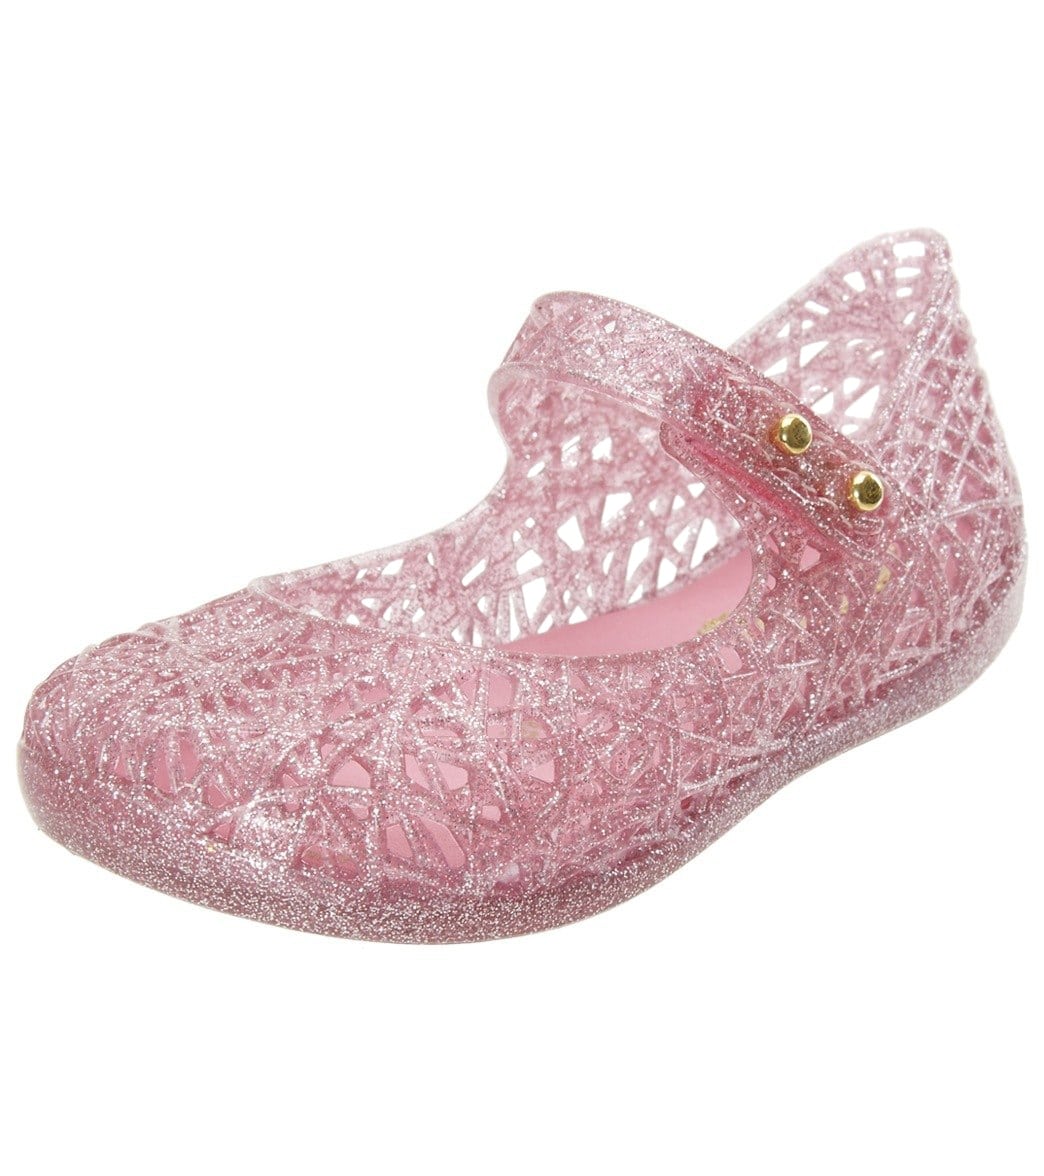 Mel By Melissa Girls' Mini Zig Zag Mary Jane Shoes - Pnk Gltr 5 12-18 Months Pink Glitter Pvc - Swimoutlet.com